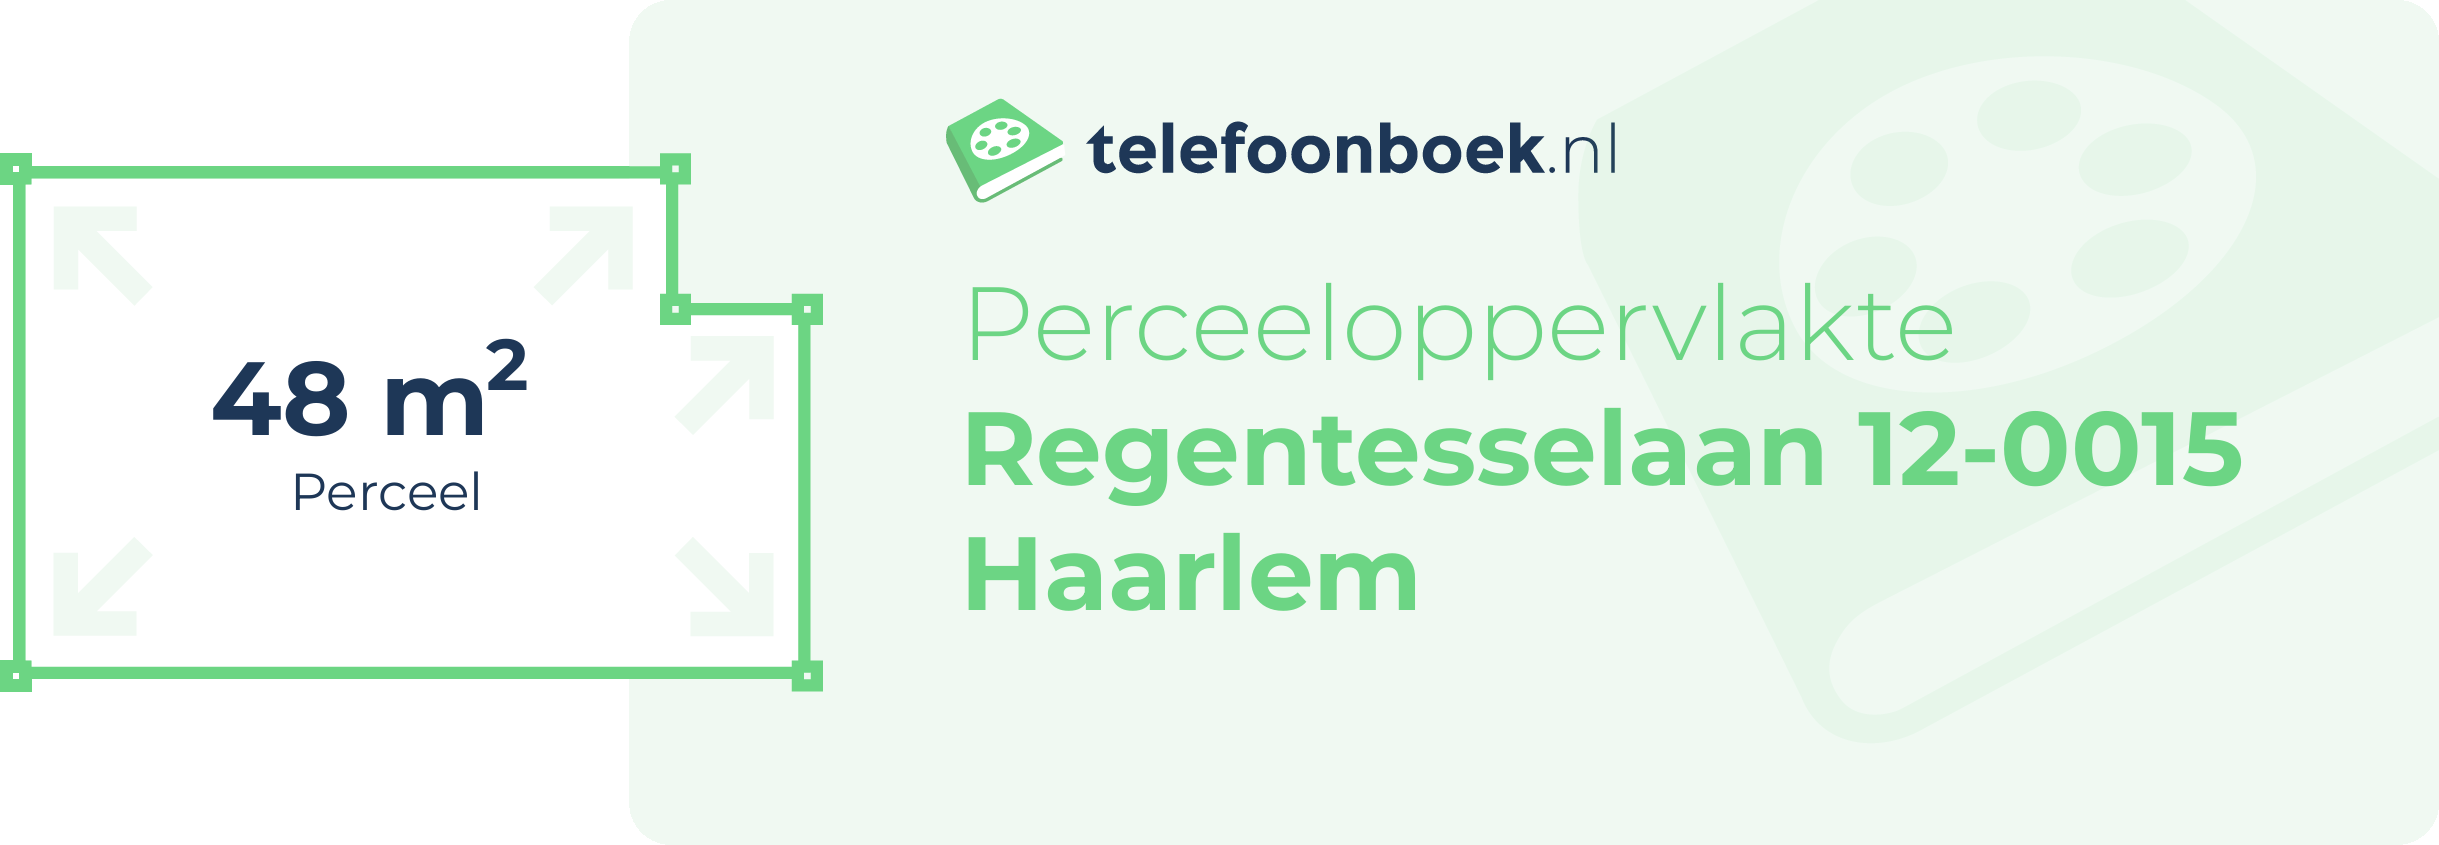 Perceeloppervlakte Regentesselaan 12-0015 Haarlem